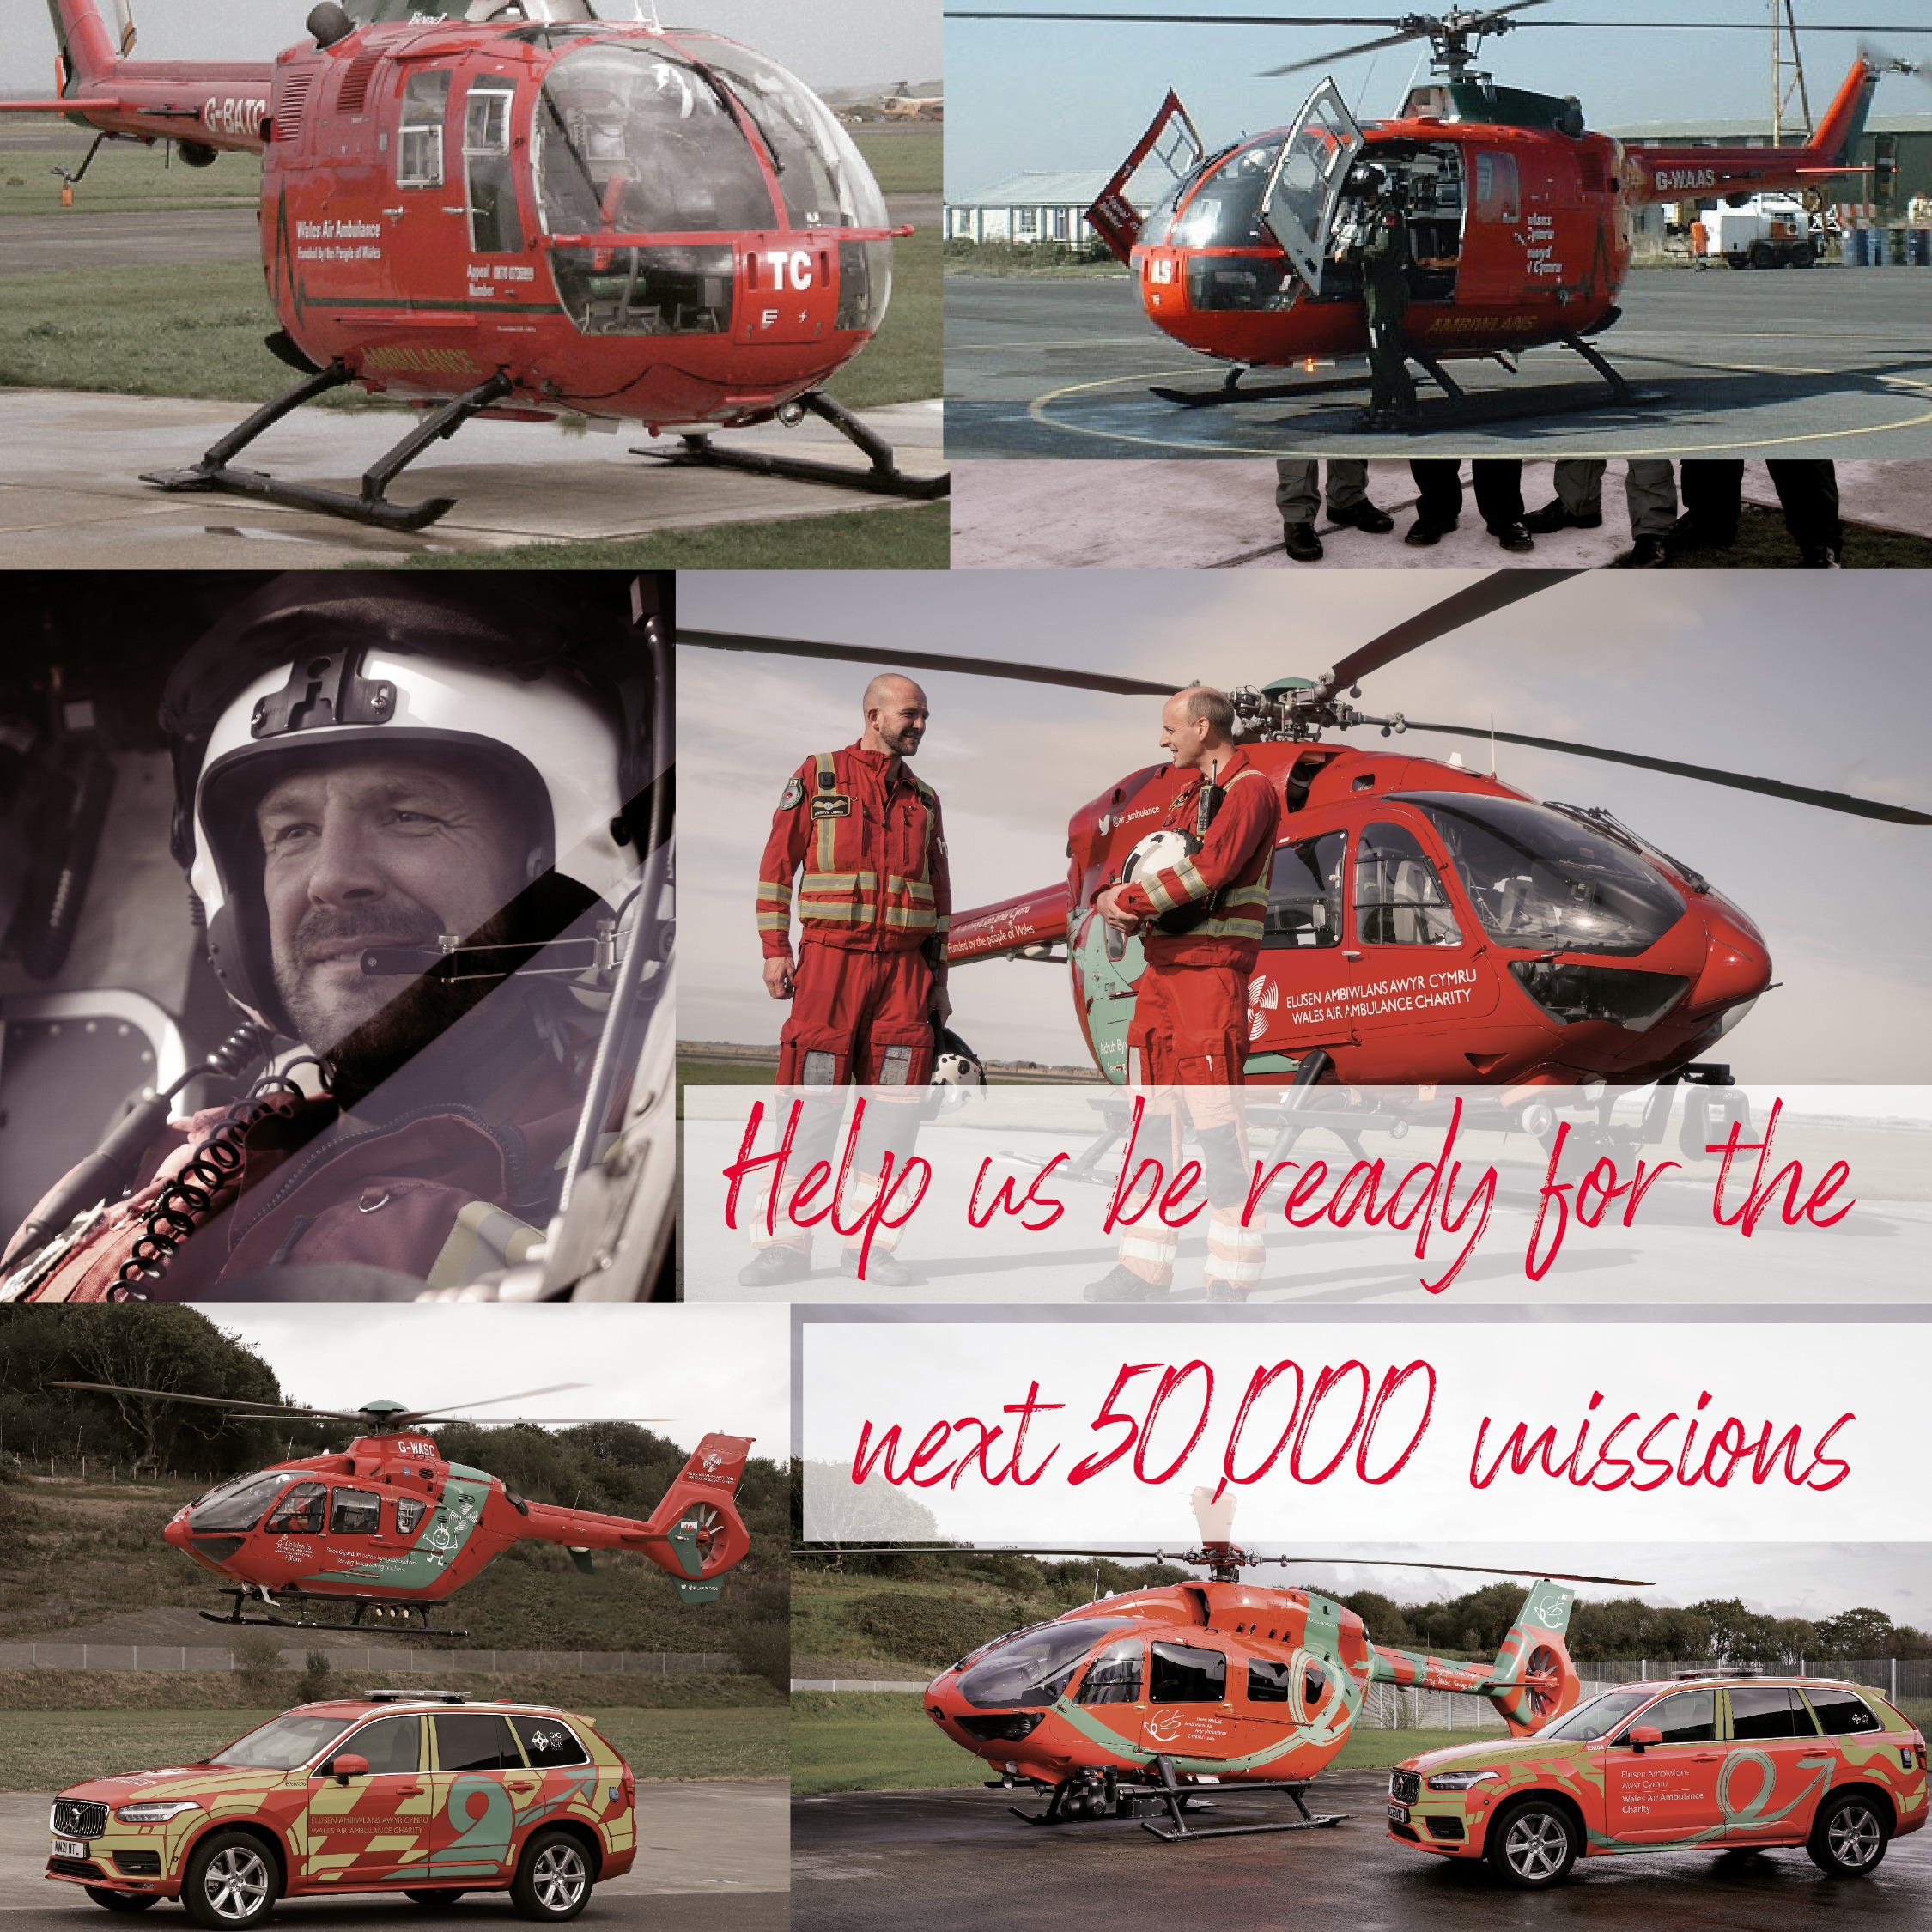 Wales Air Ambulance: 50,000 missions logo